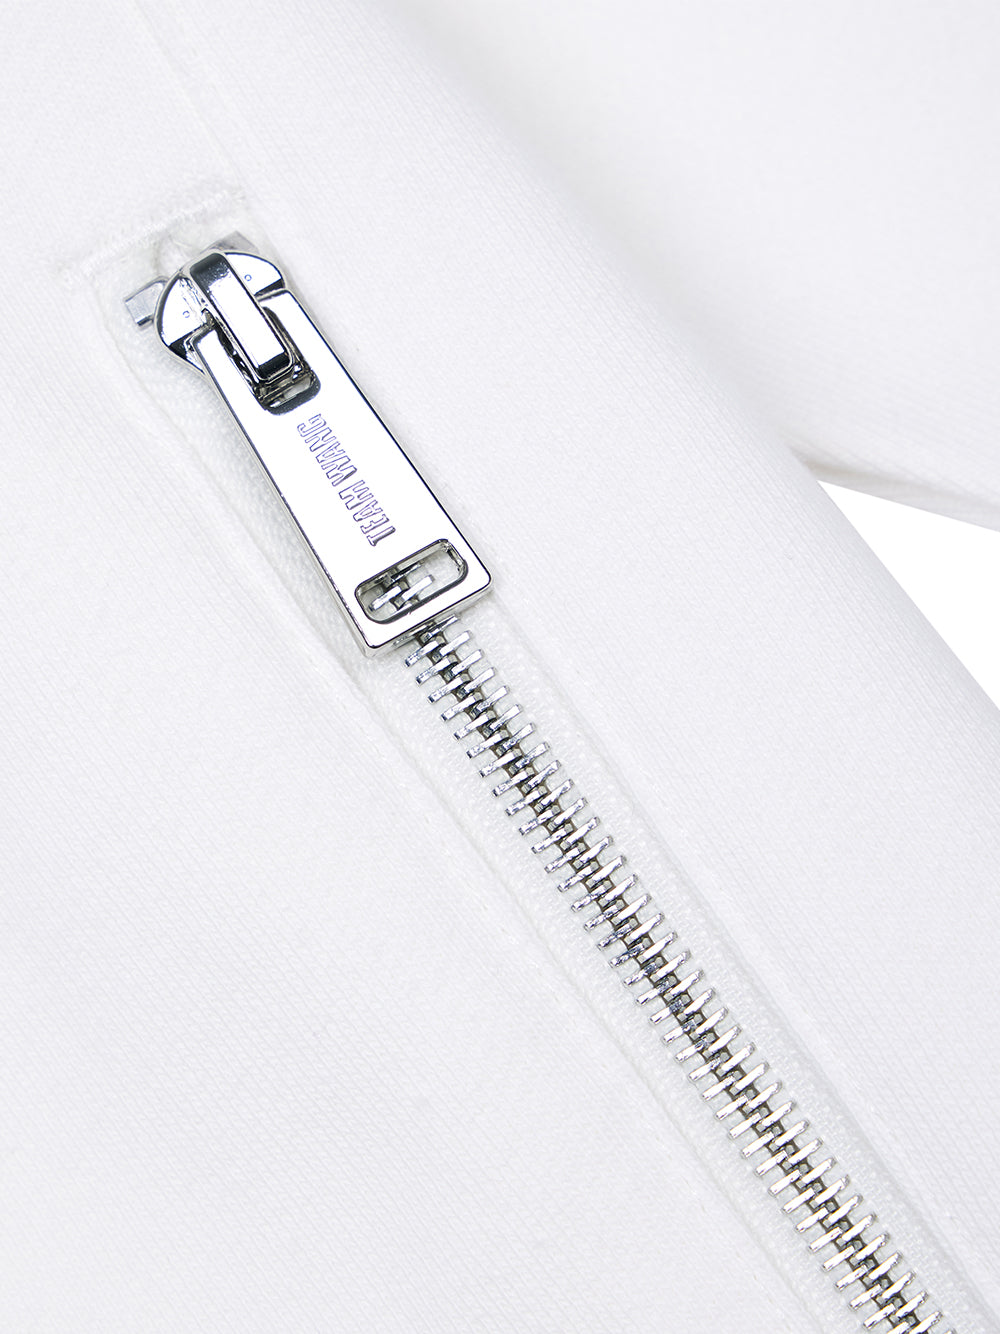 TEAM WANG design x CHUANG ASIA Zip-Up Casual Jacket (White)